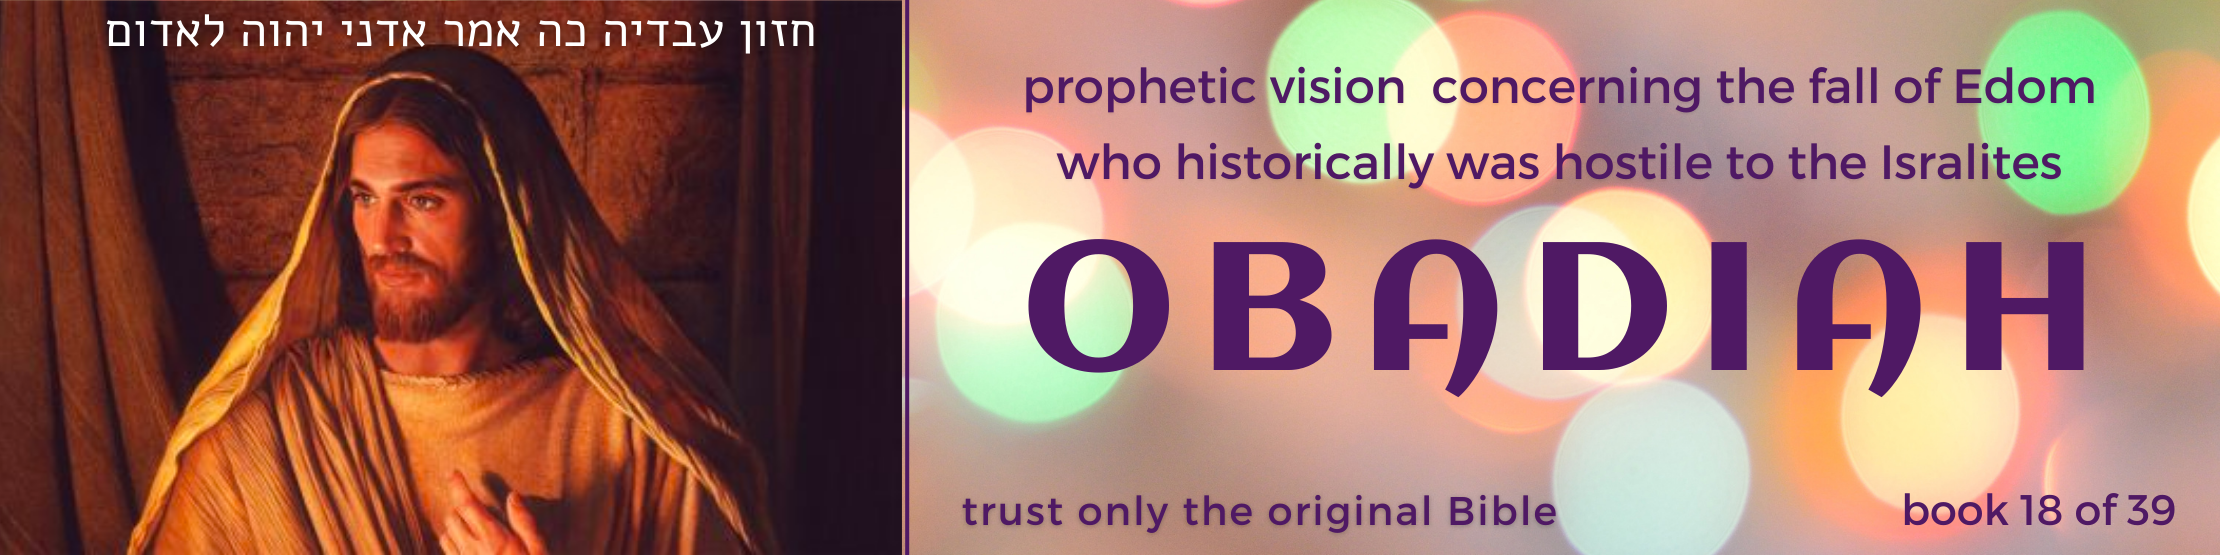 18 Obadiah book - original bible - banner